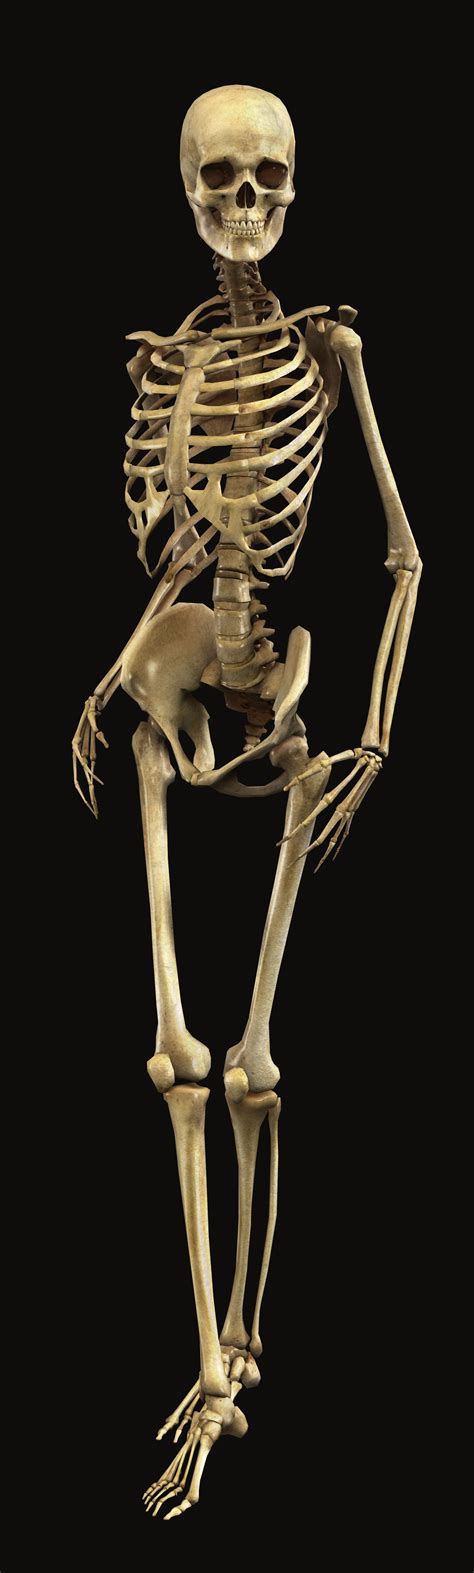 Related Image Skeleton Anatomy Human Skeleton Skeleton